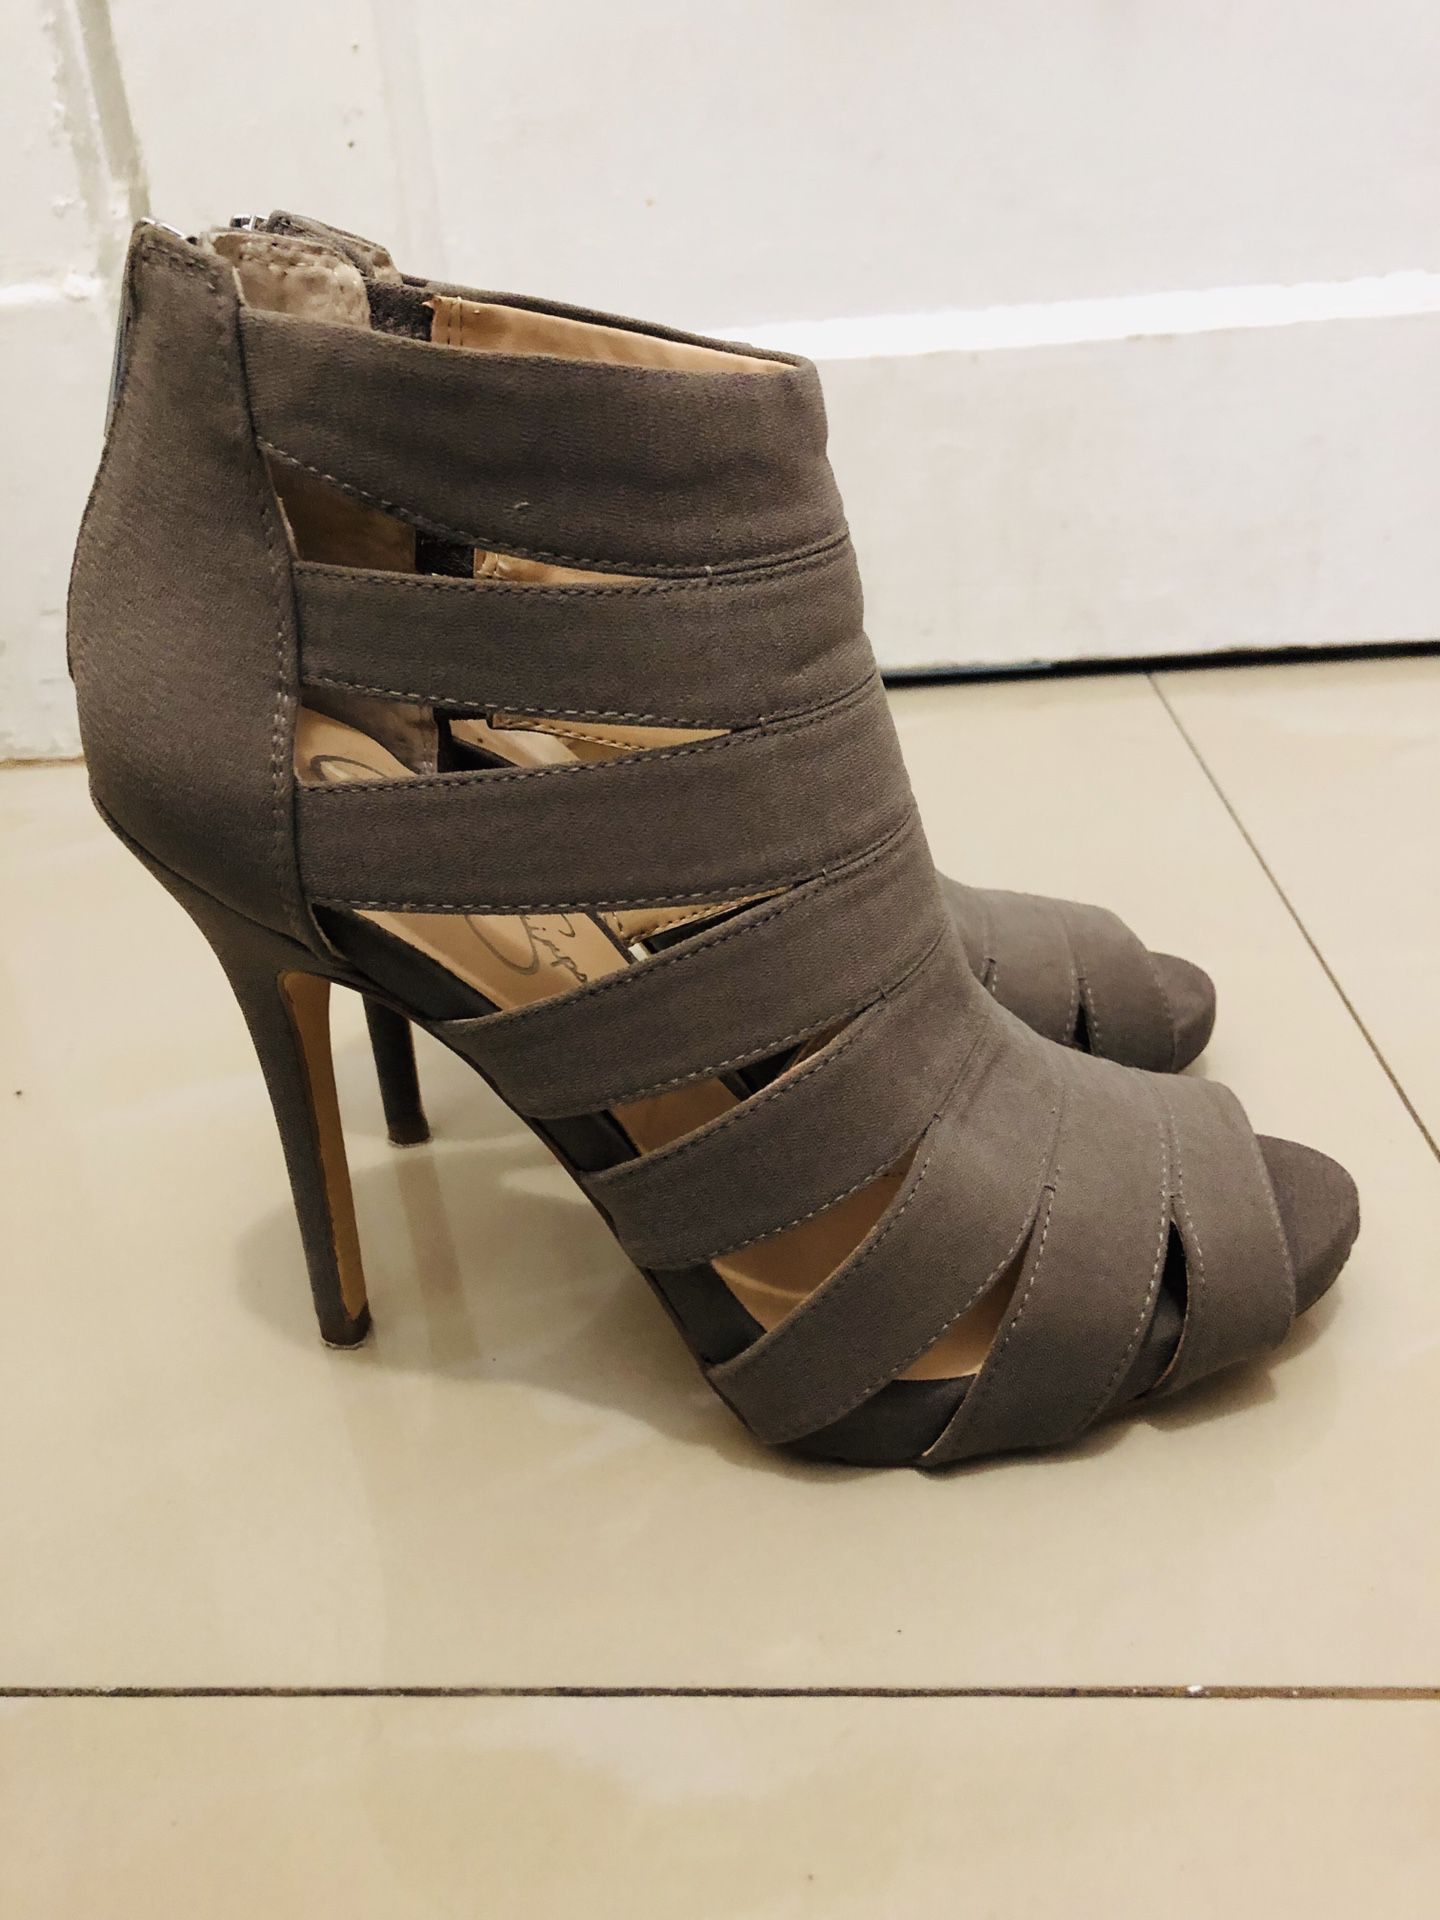 Jessica Simpson heels / Miami 33133 / pick up only